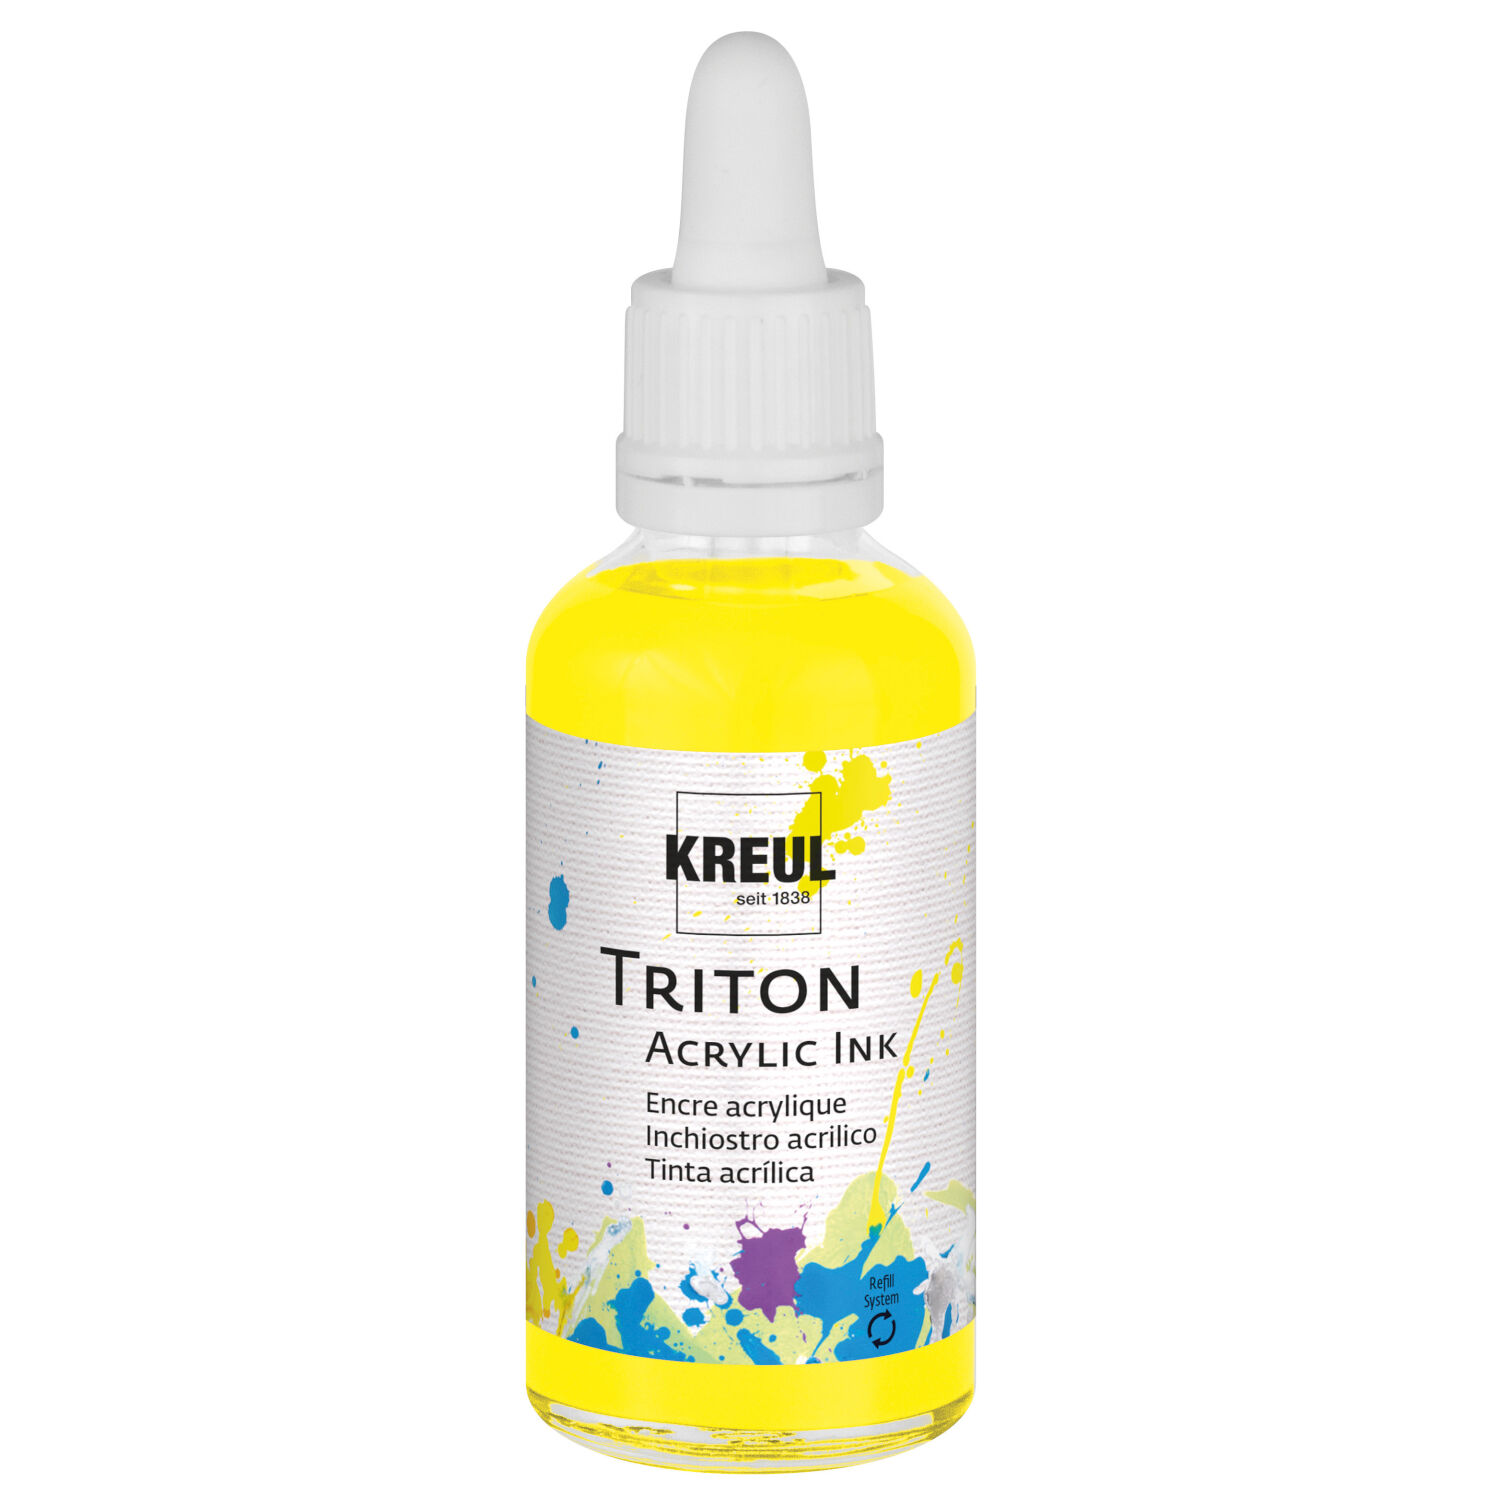 NEU KREUL Triton Acrylic Ink Zitron, 50 ml